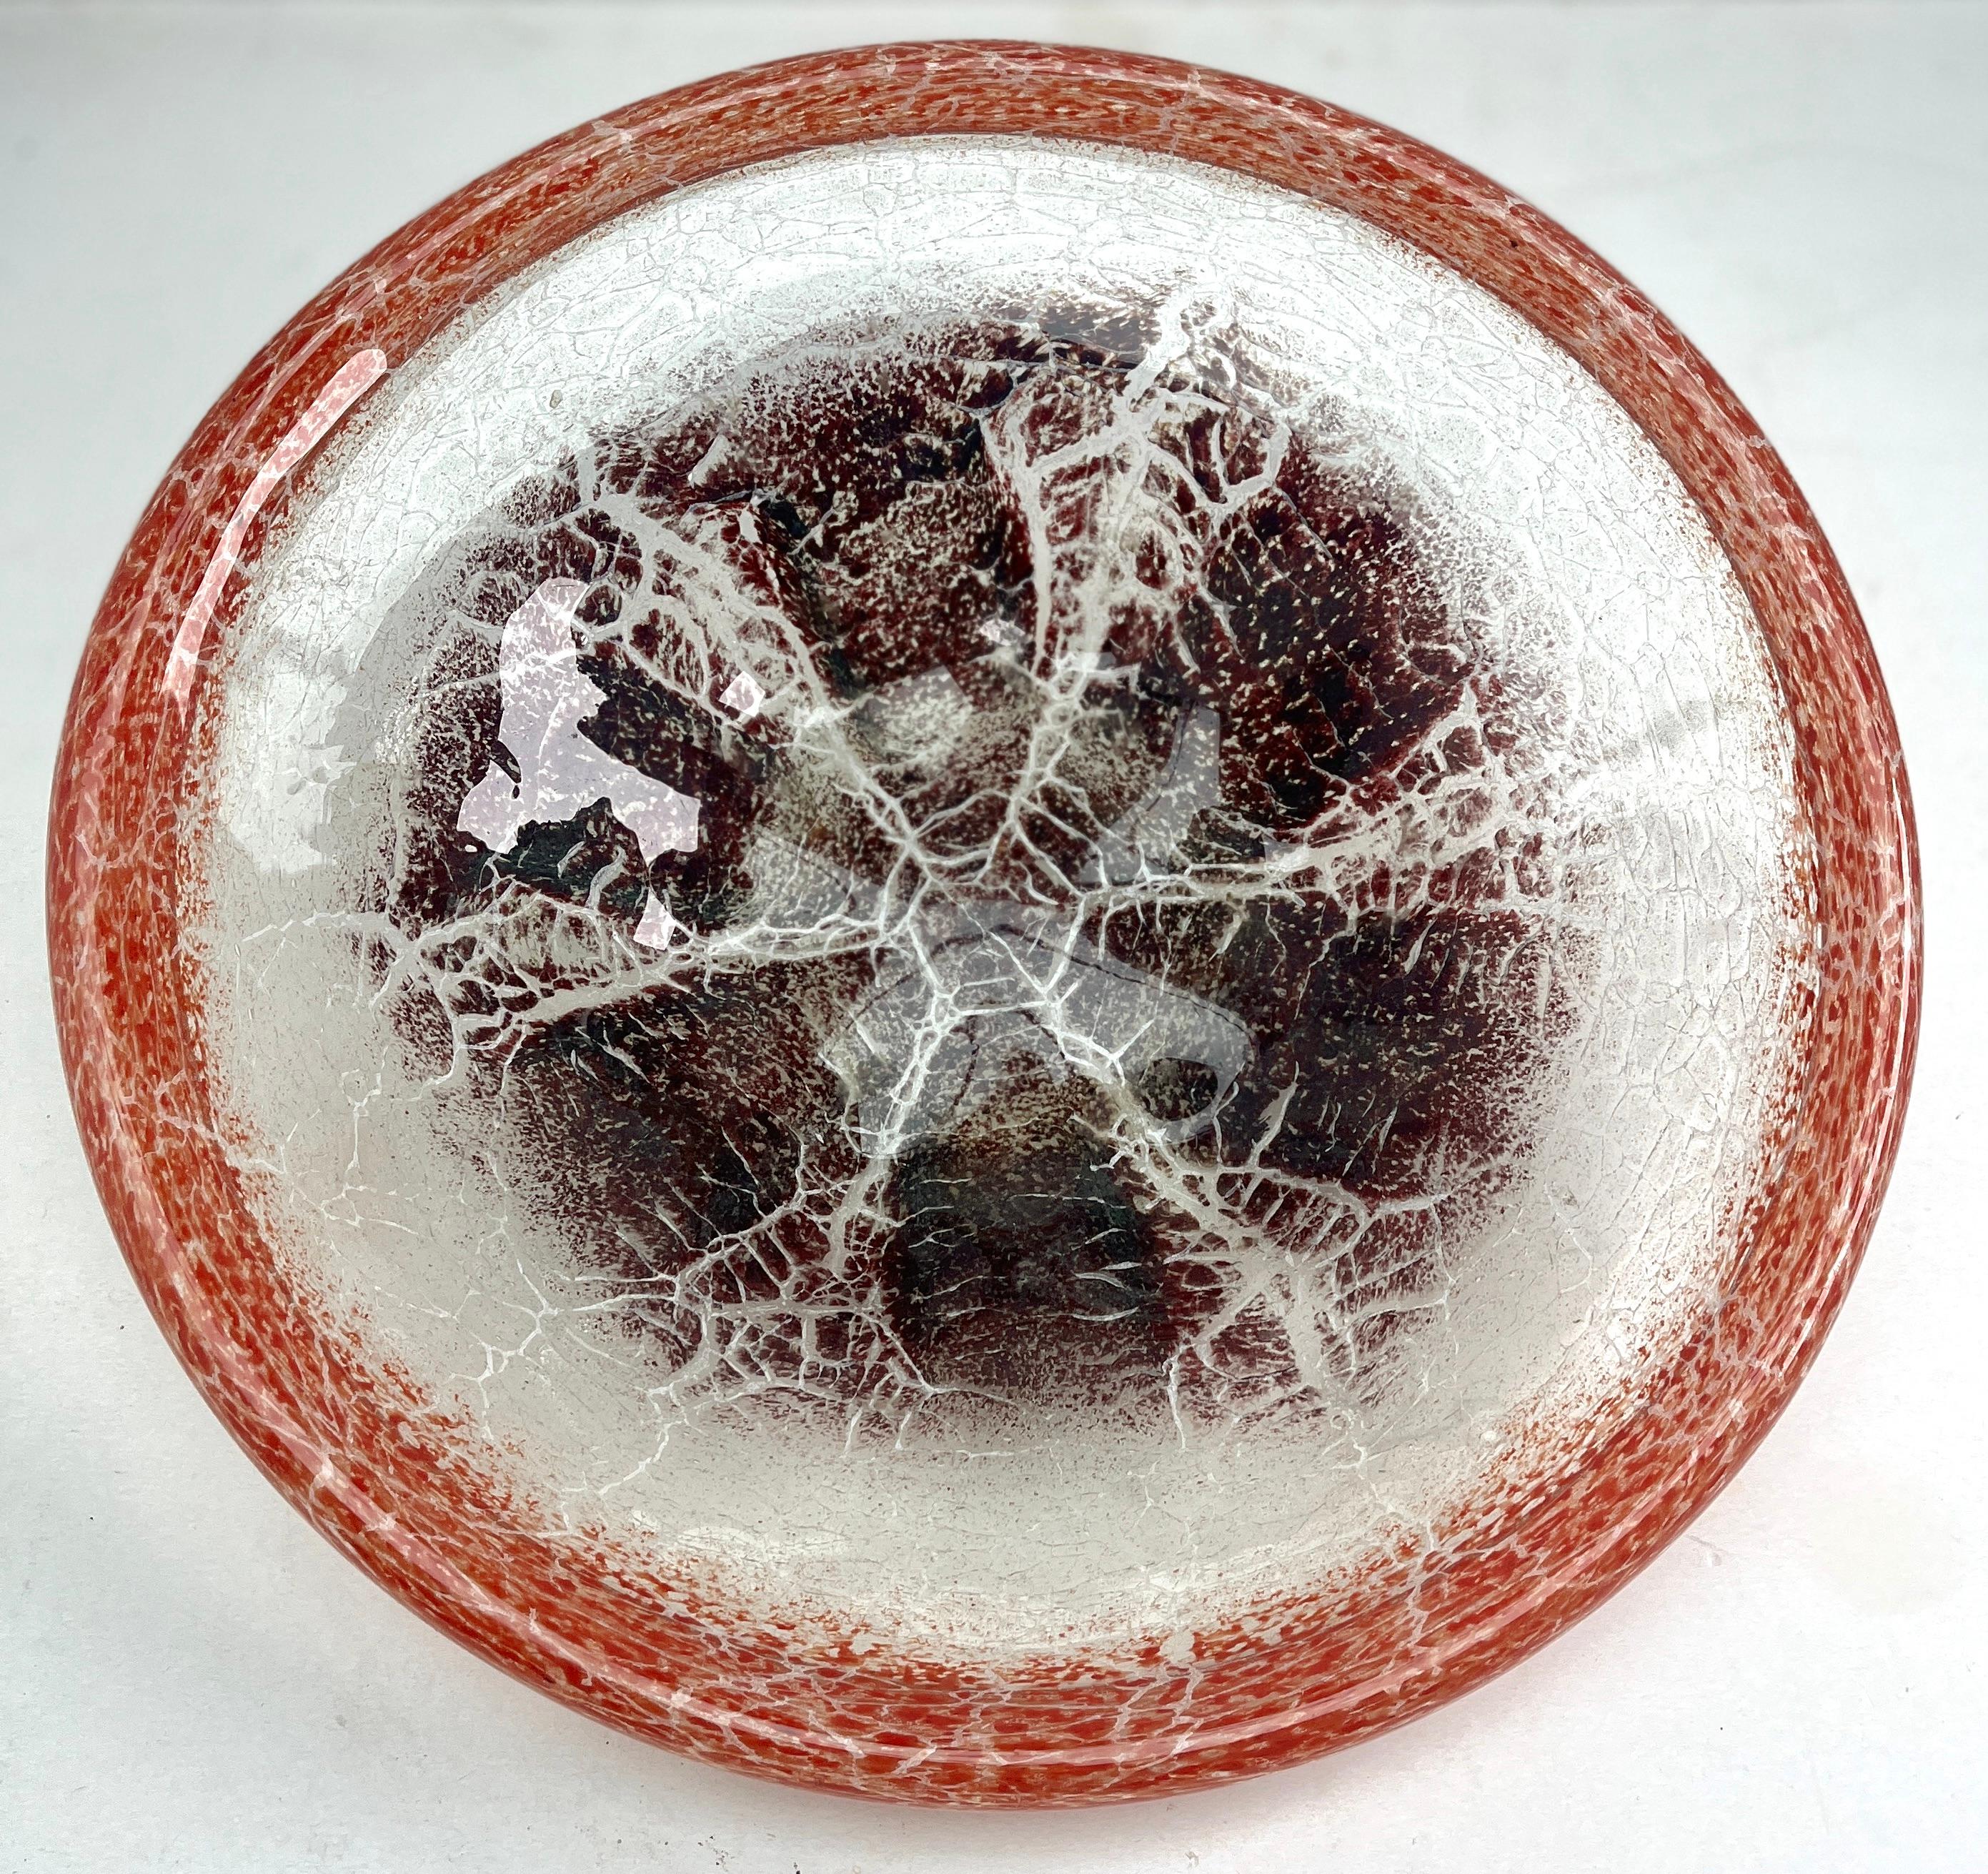 Large WMF 'Ikora' crackled art glass bowl
German glass bowl by Karl Wiedmann for WMF Ikora, 1930s Baushaus Art Deco.

A decorative 'Ikora' glass bowl, produced, by WMF (Wurttembergische Metallwarenfabrik) in Germany.
With crackled details in